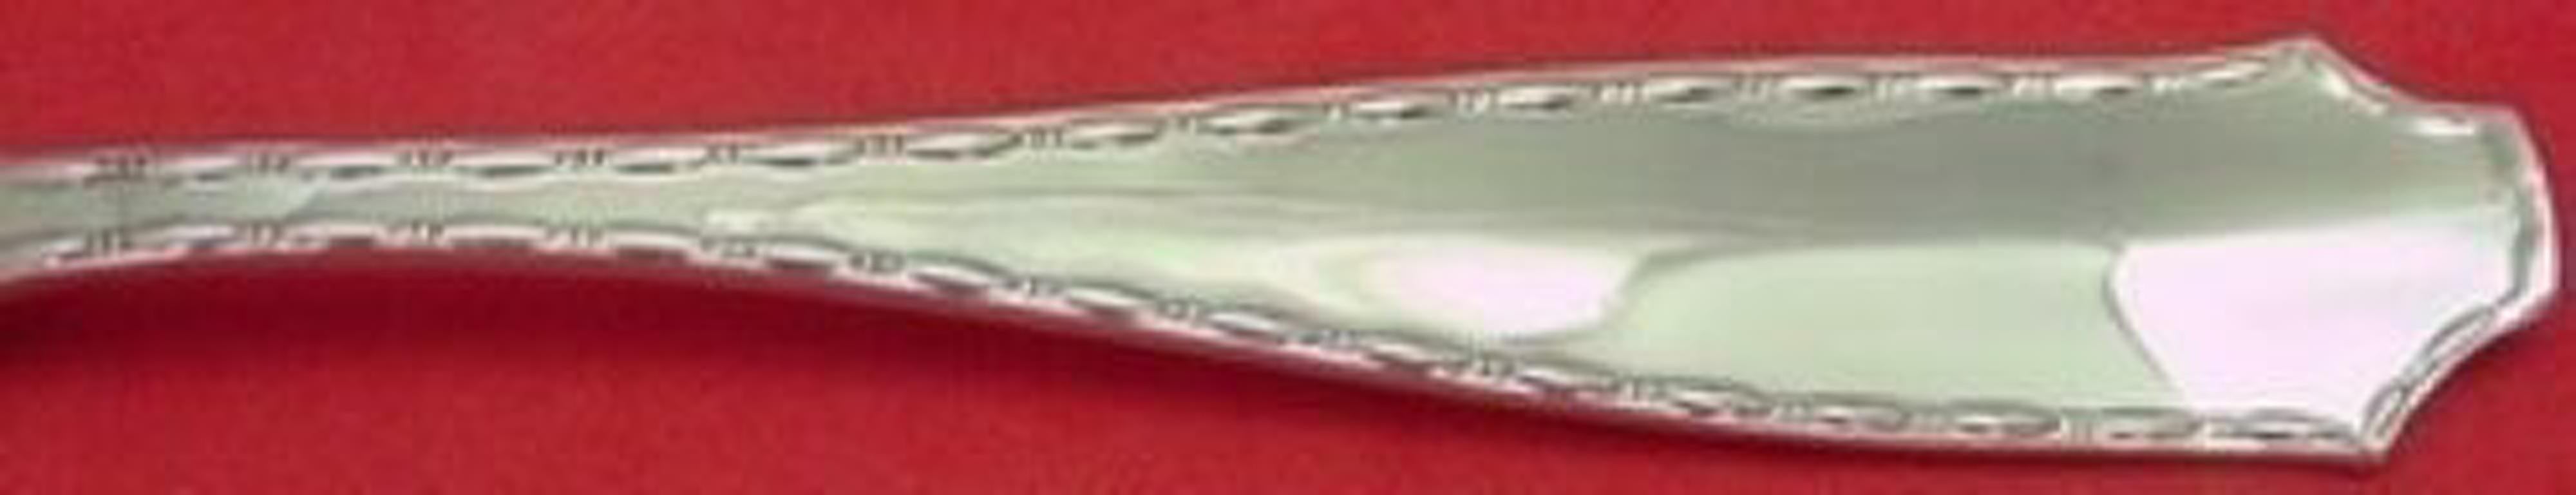 Sterling silver flat handle butter spreader 6